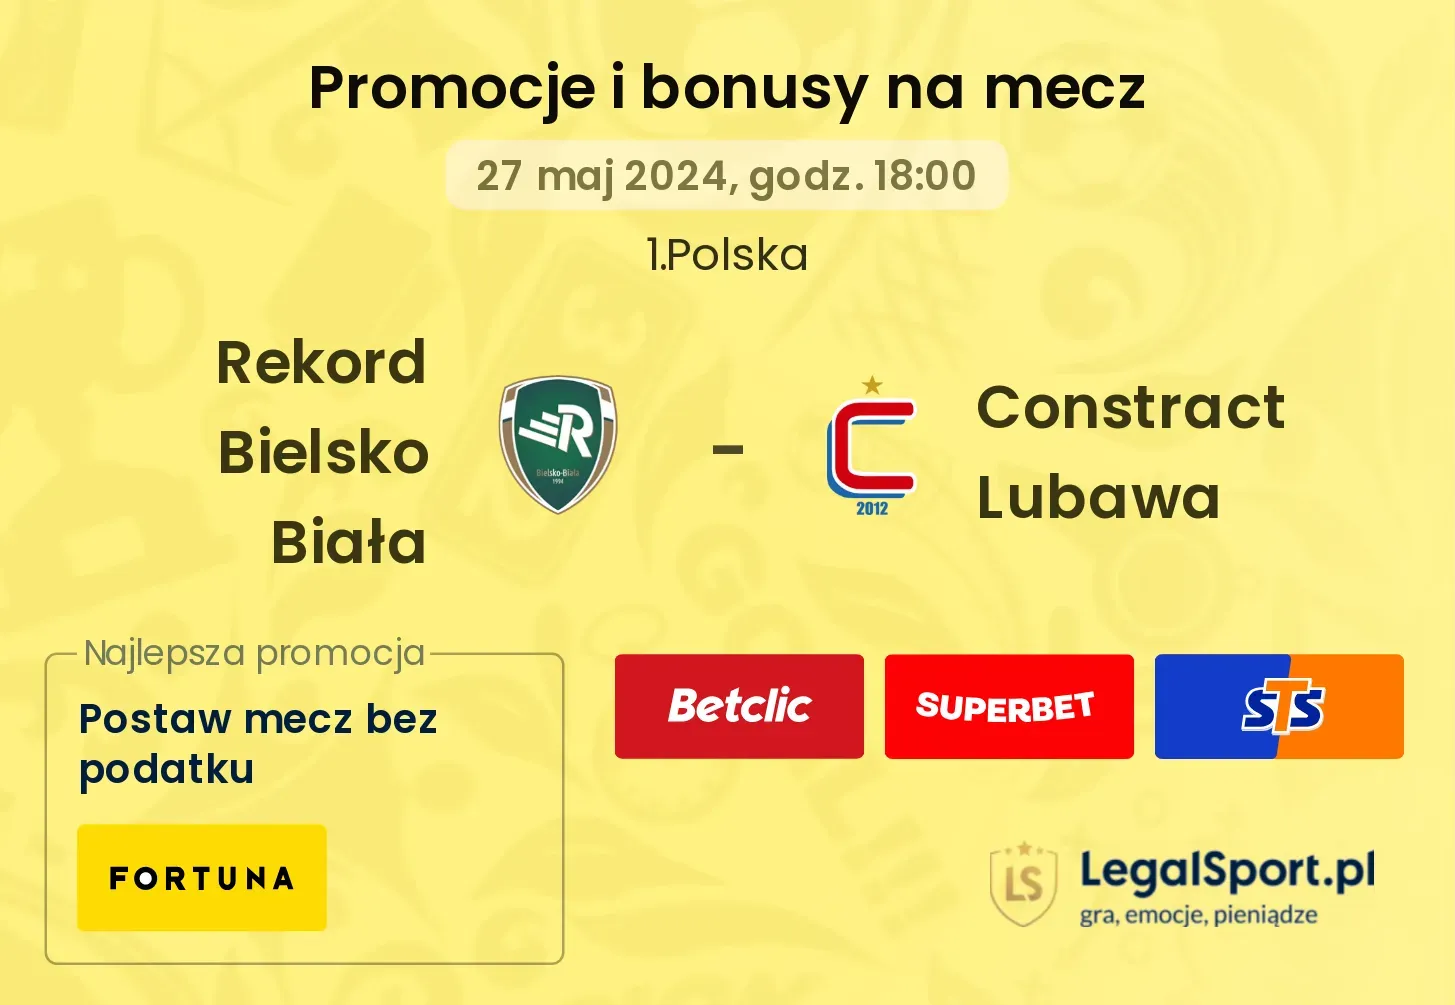 Rekord Bielsko Biała - Constract Lubawa promocje bonusy na mecz